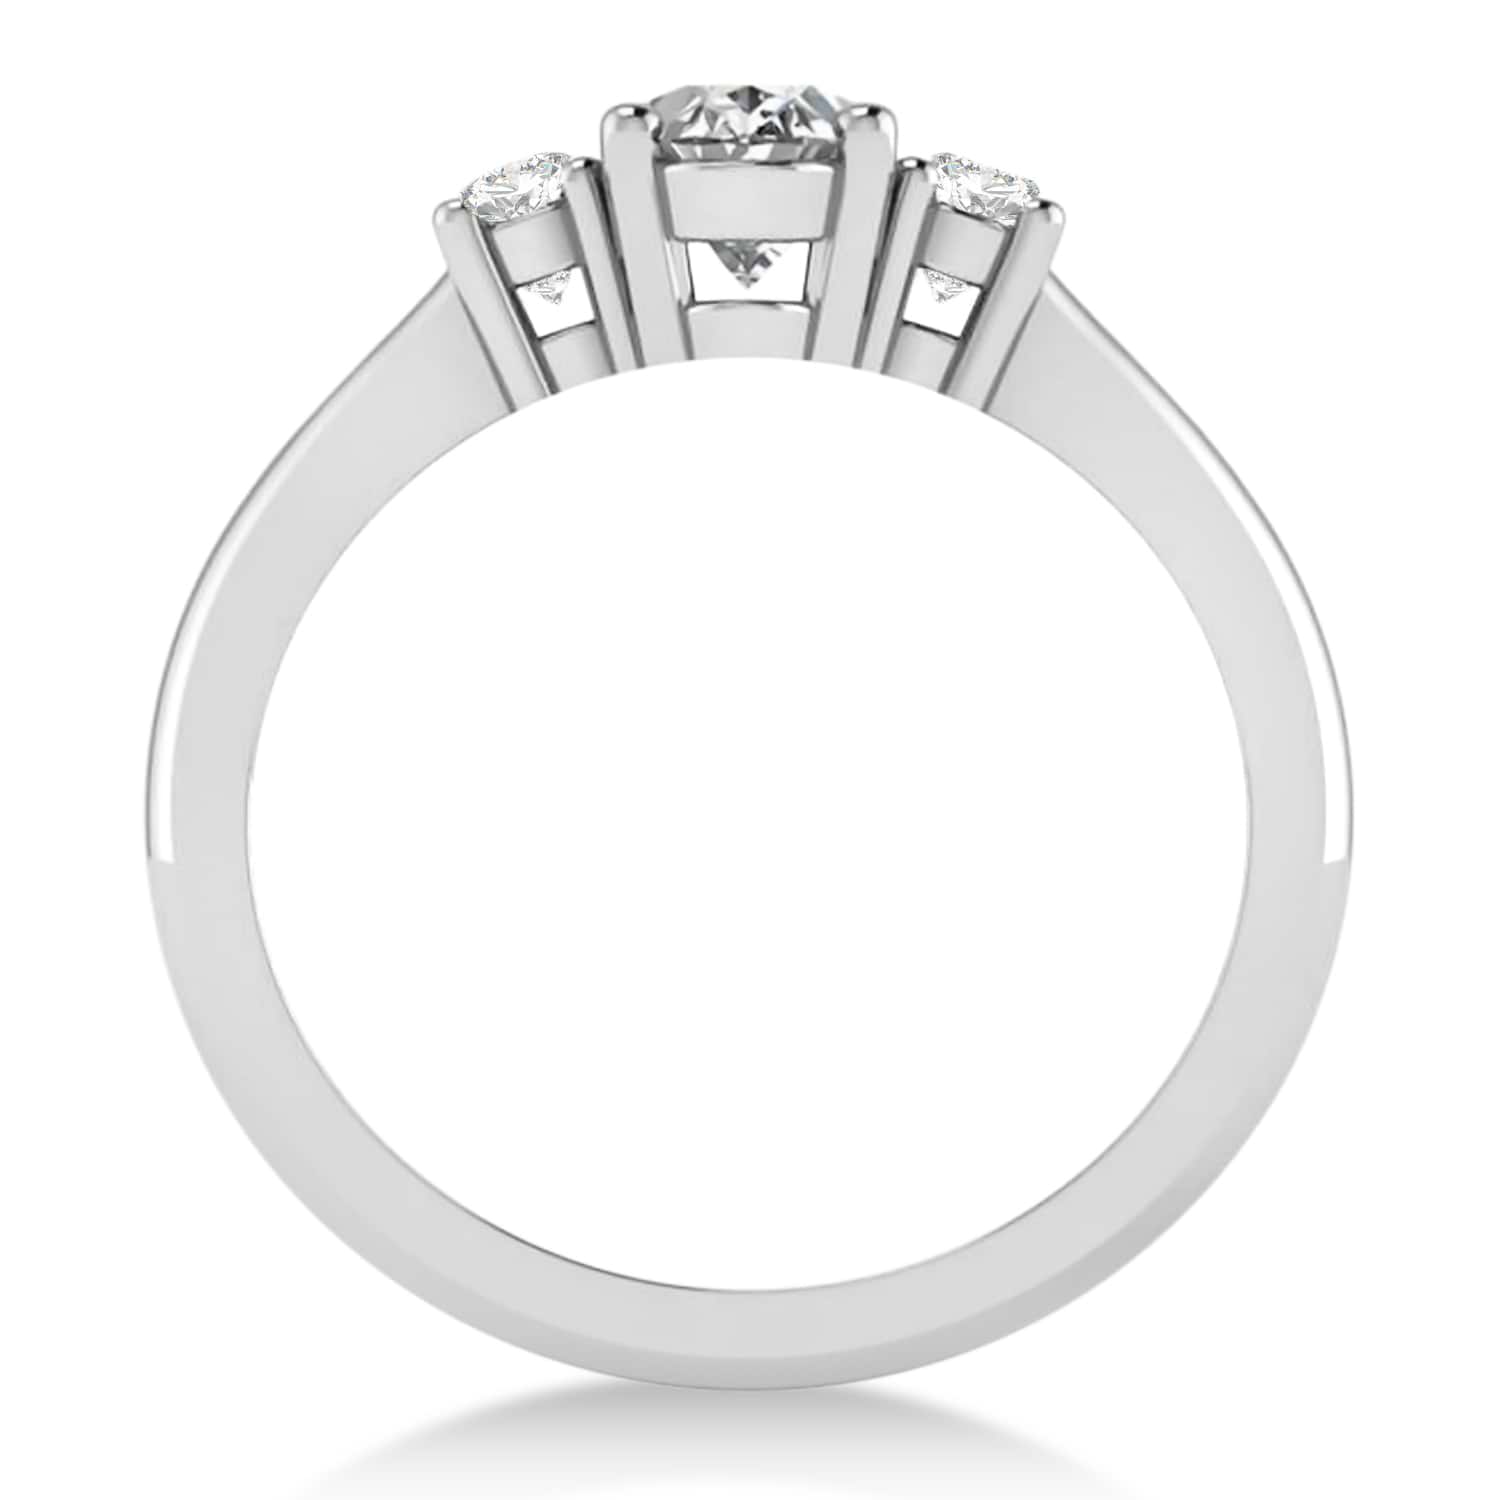 Oval Diamond Three-Stone Engagement Ring 14k White Gold (1.20ct)